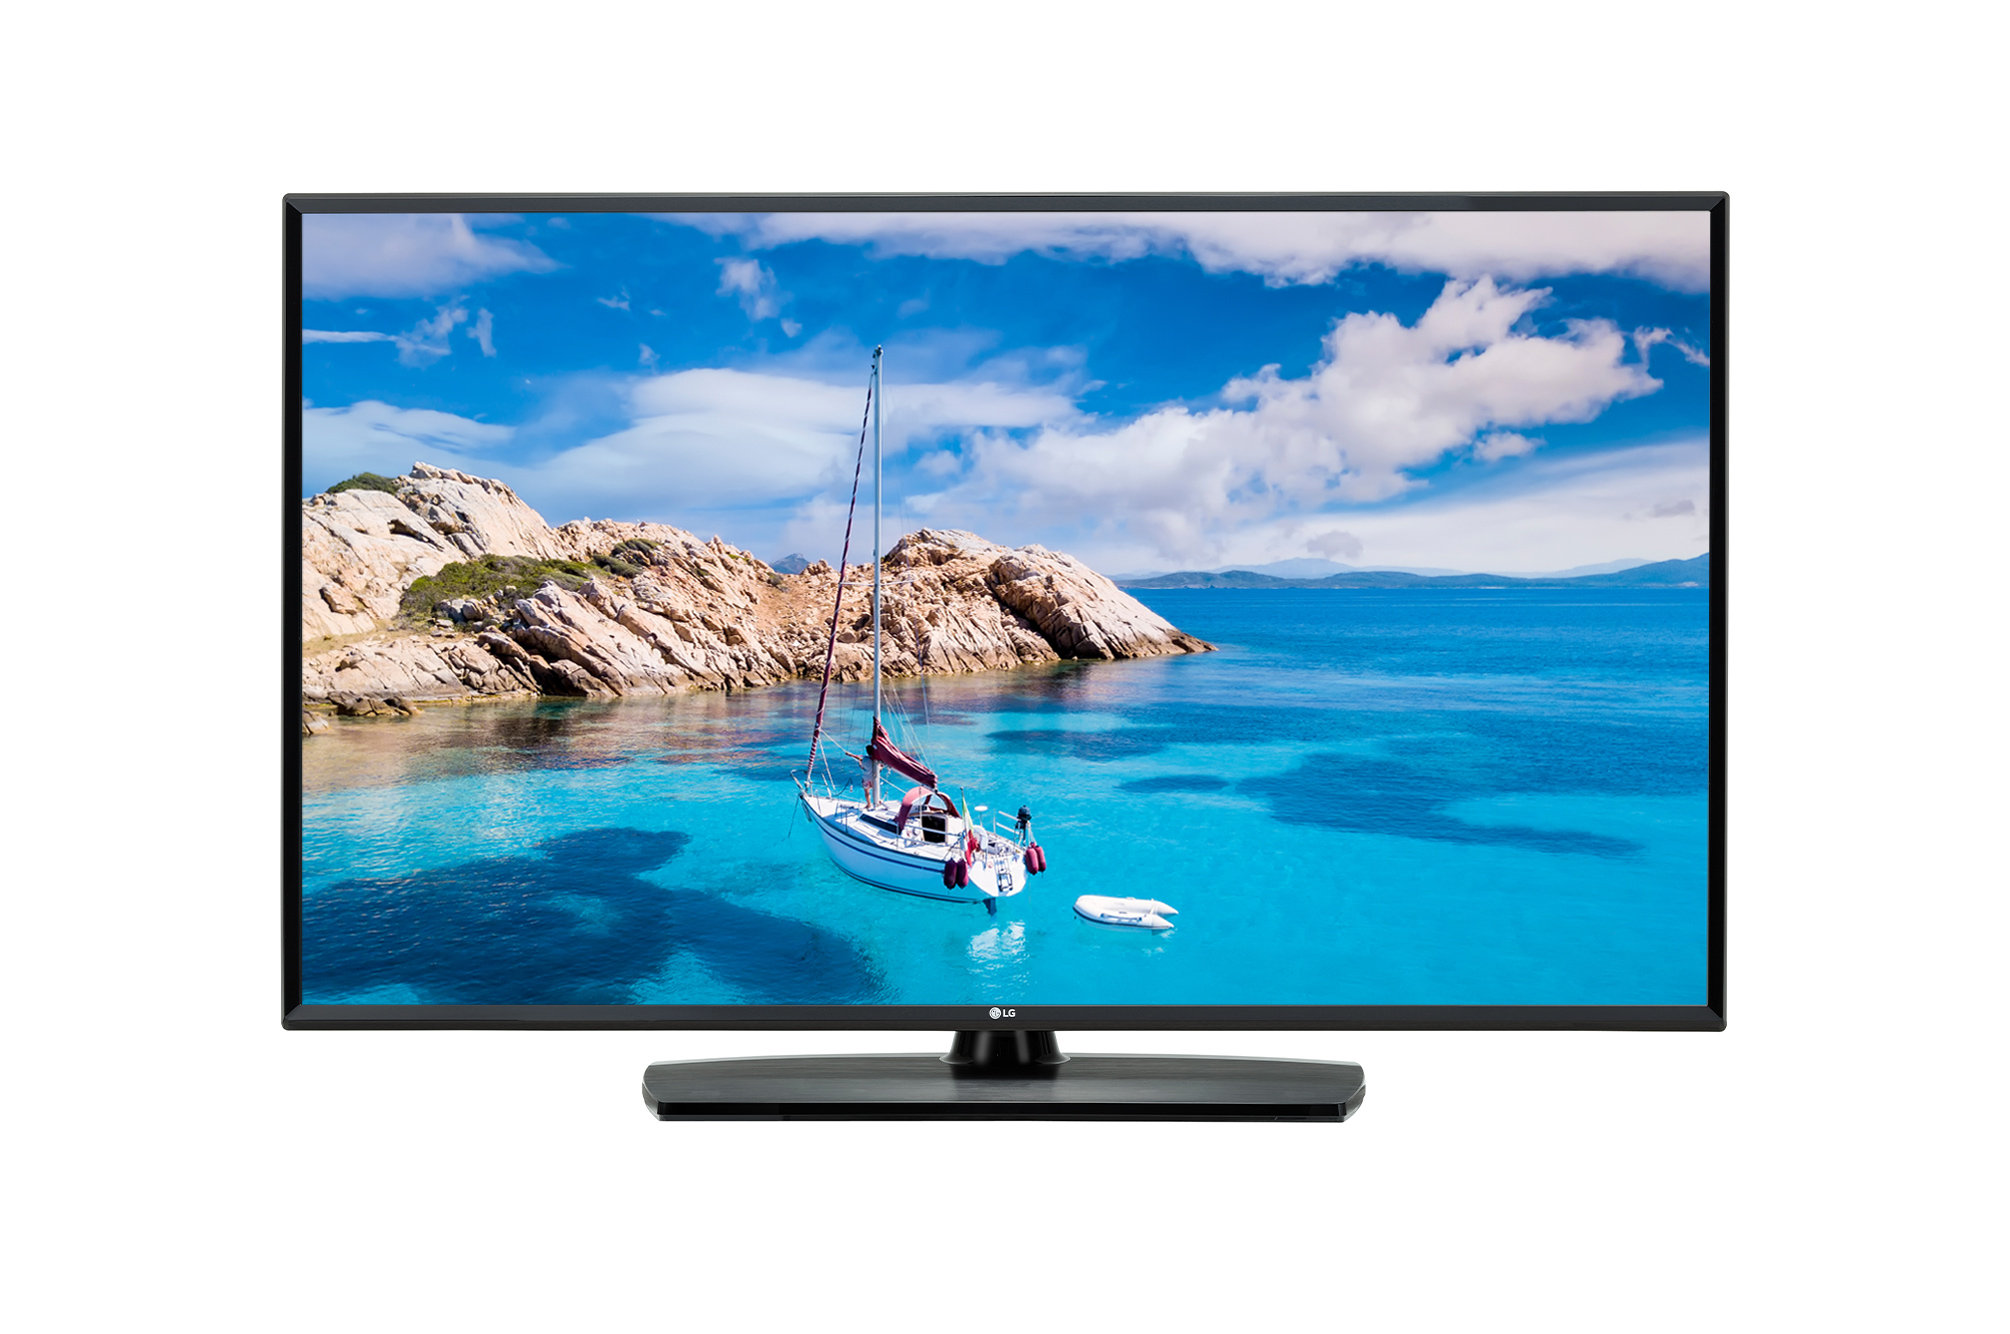 pictured is LG UM670H0 4K UHD Hotel TV – Smart 6 Series